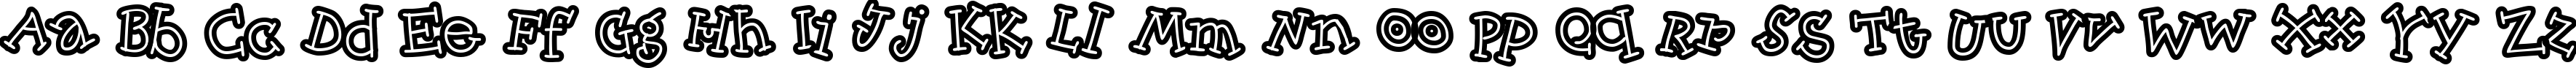 Пример написания английского алфавита шрифтом SkinnyCapKick